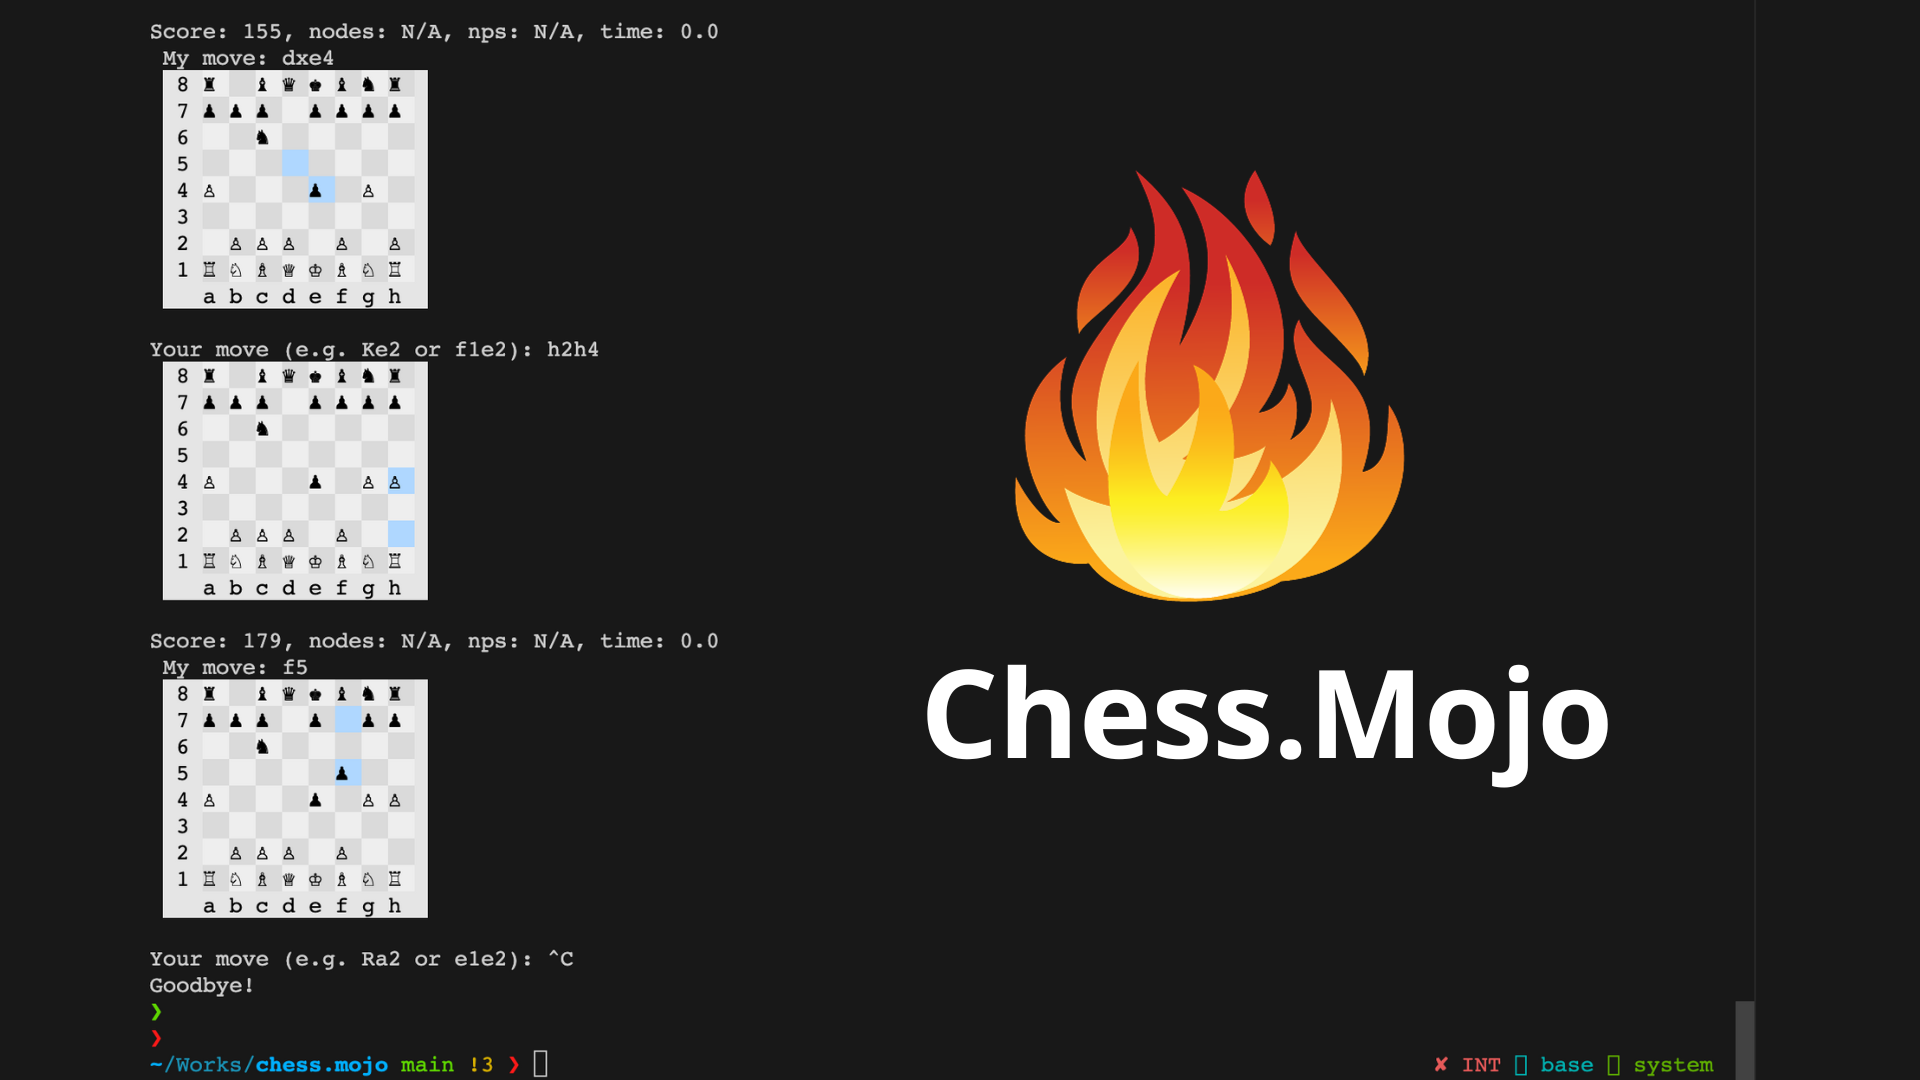 Chess.Mojo